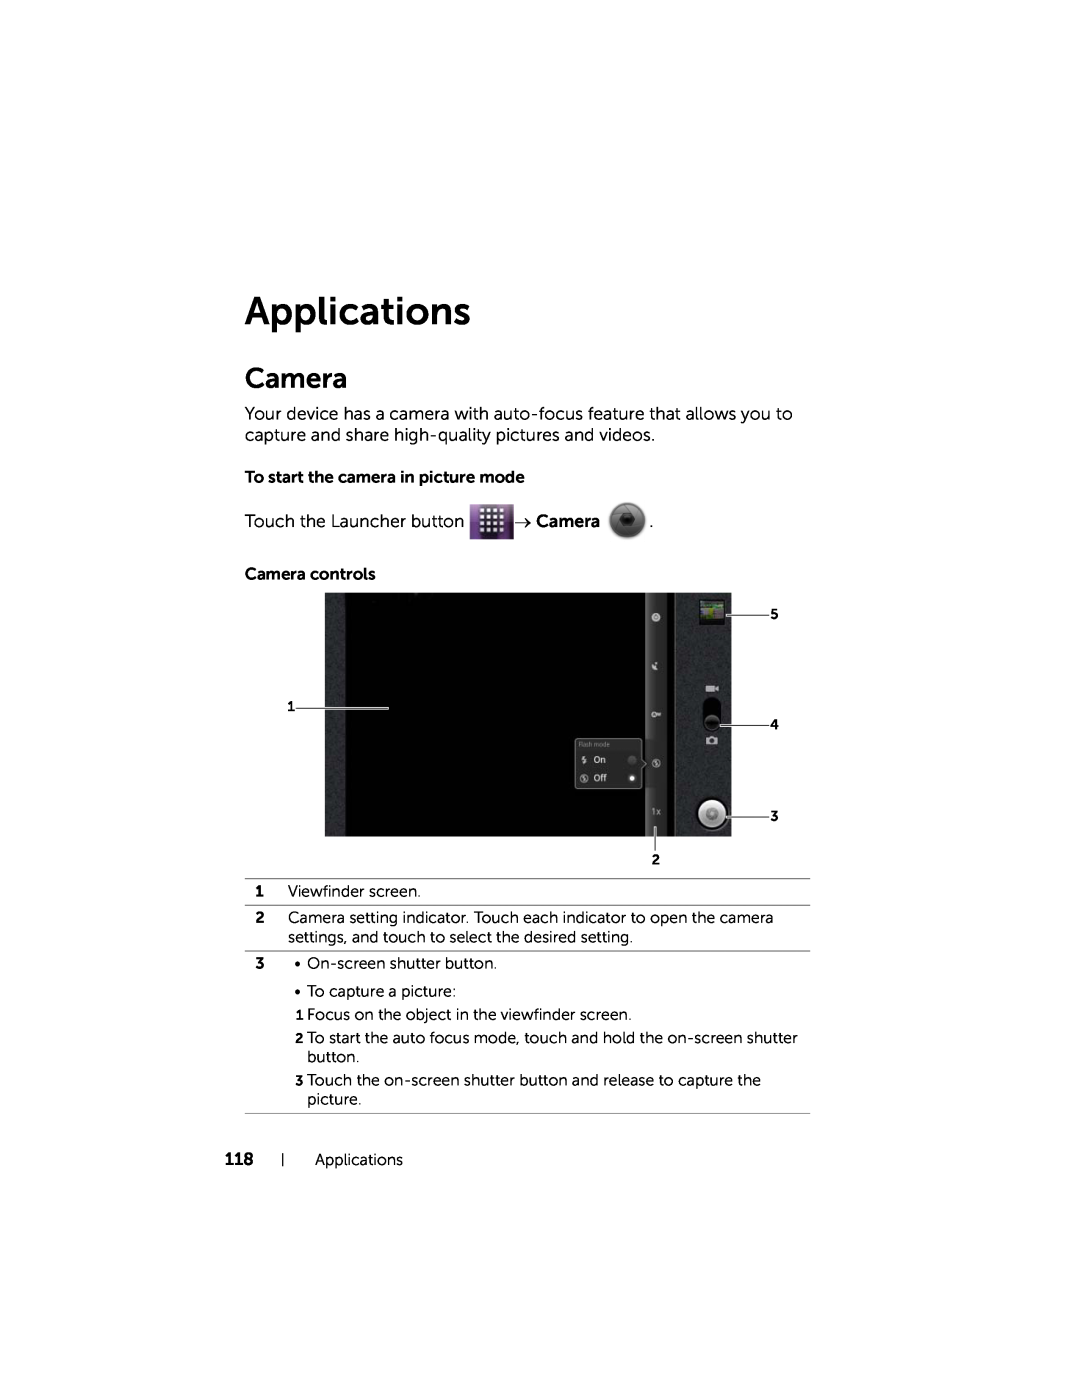 Dell 7 user manual Applications, Camera 